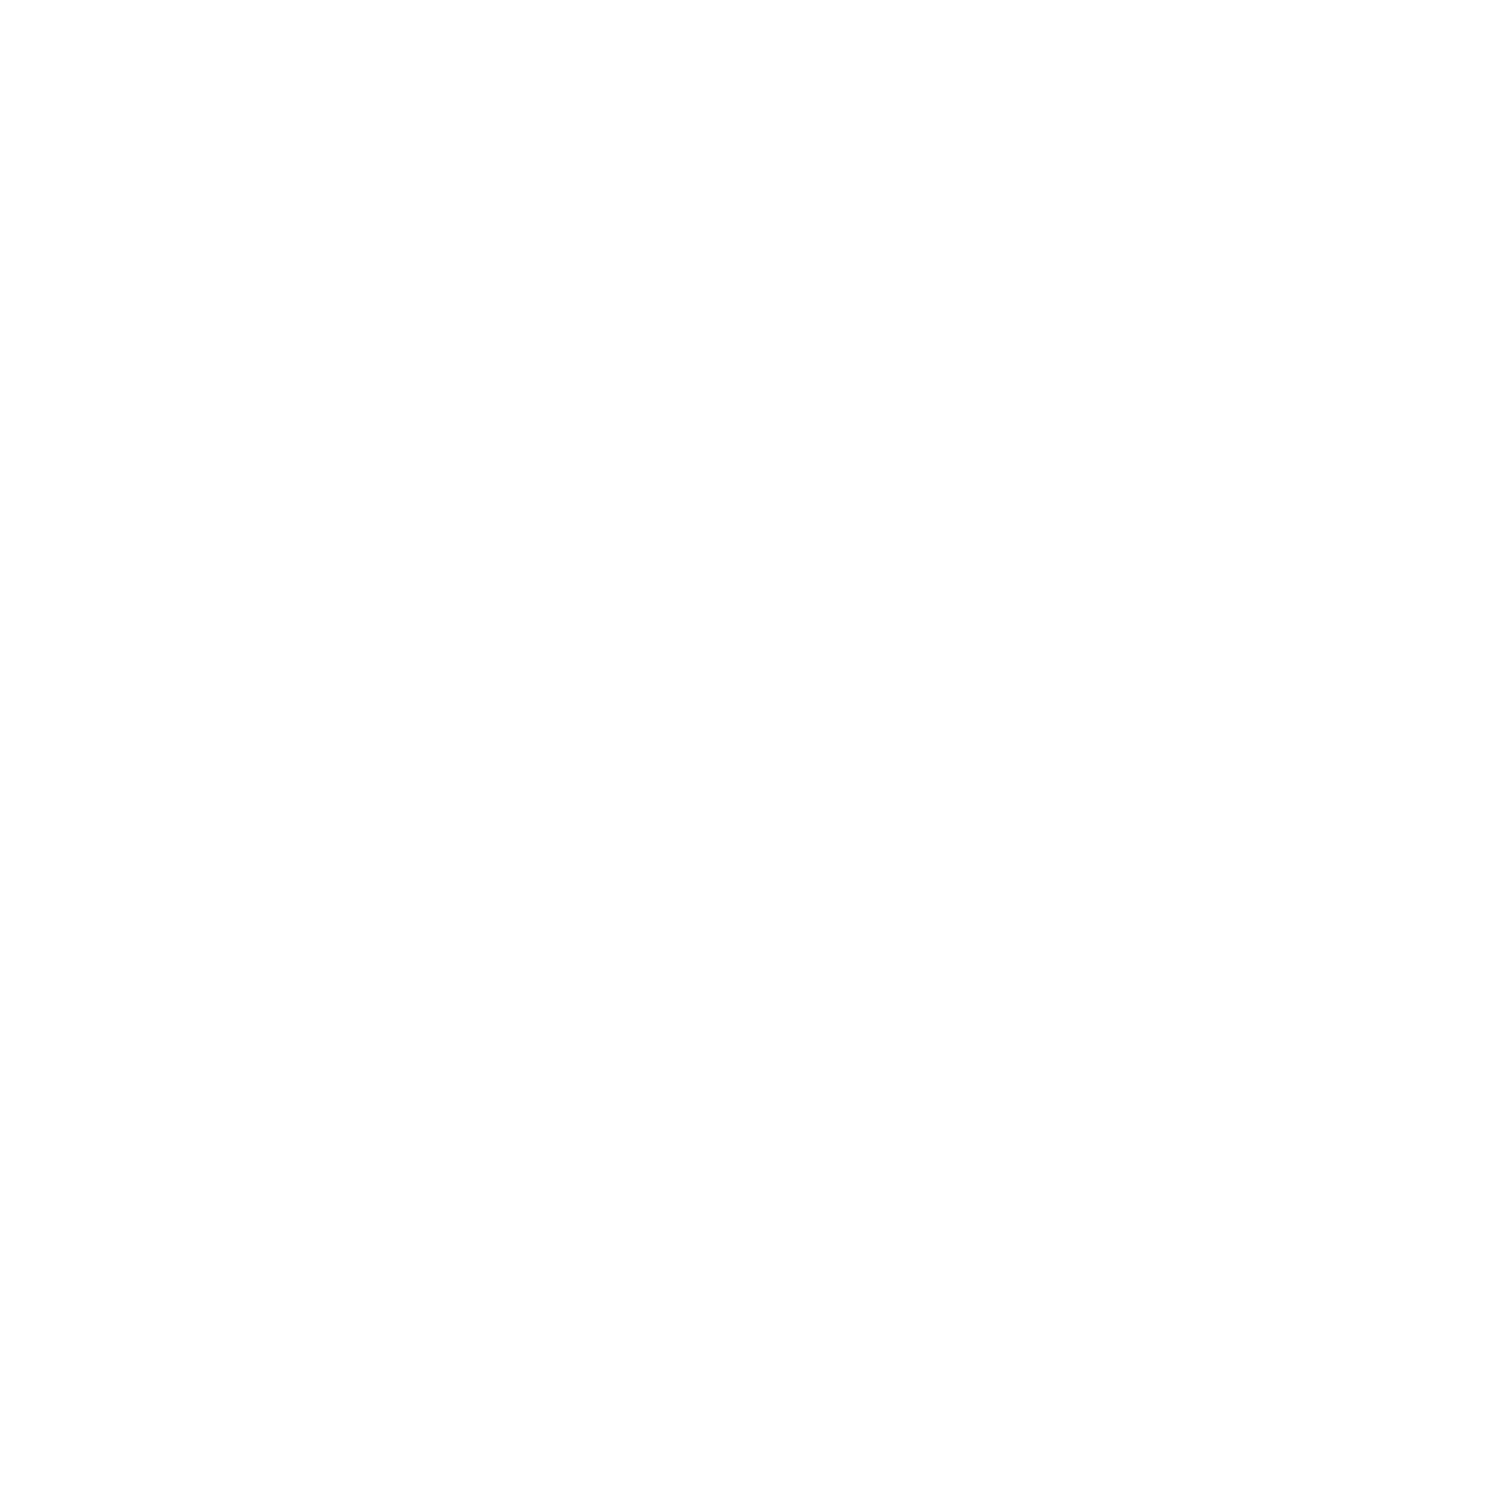 Web3 University